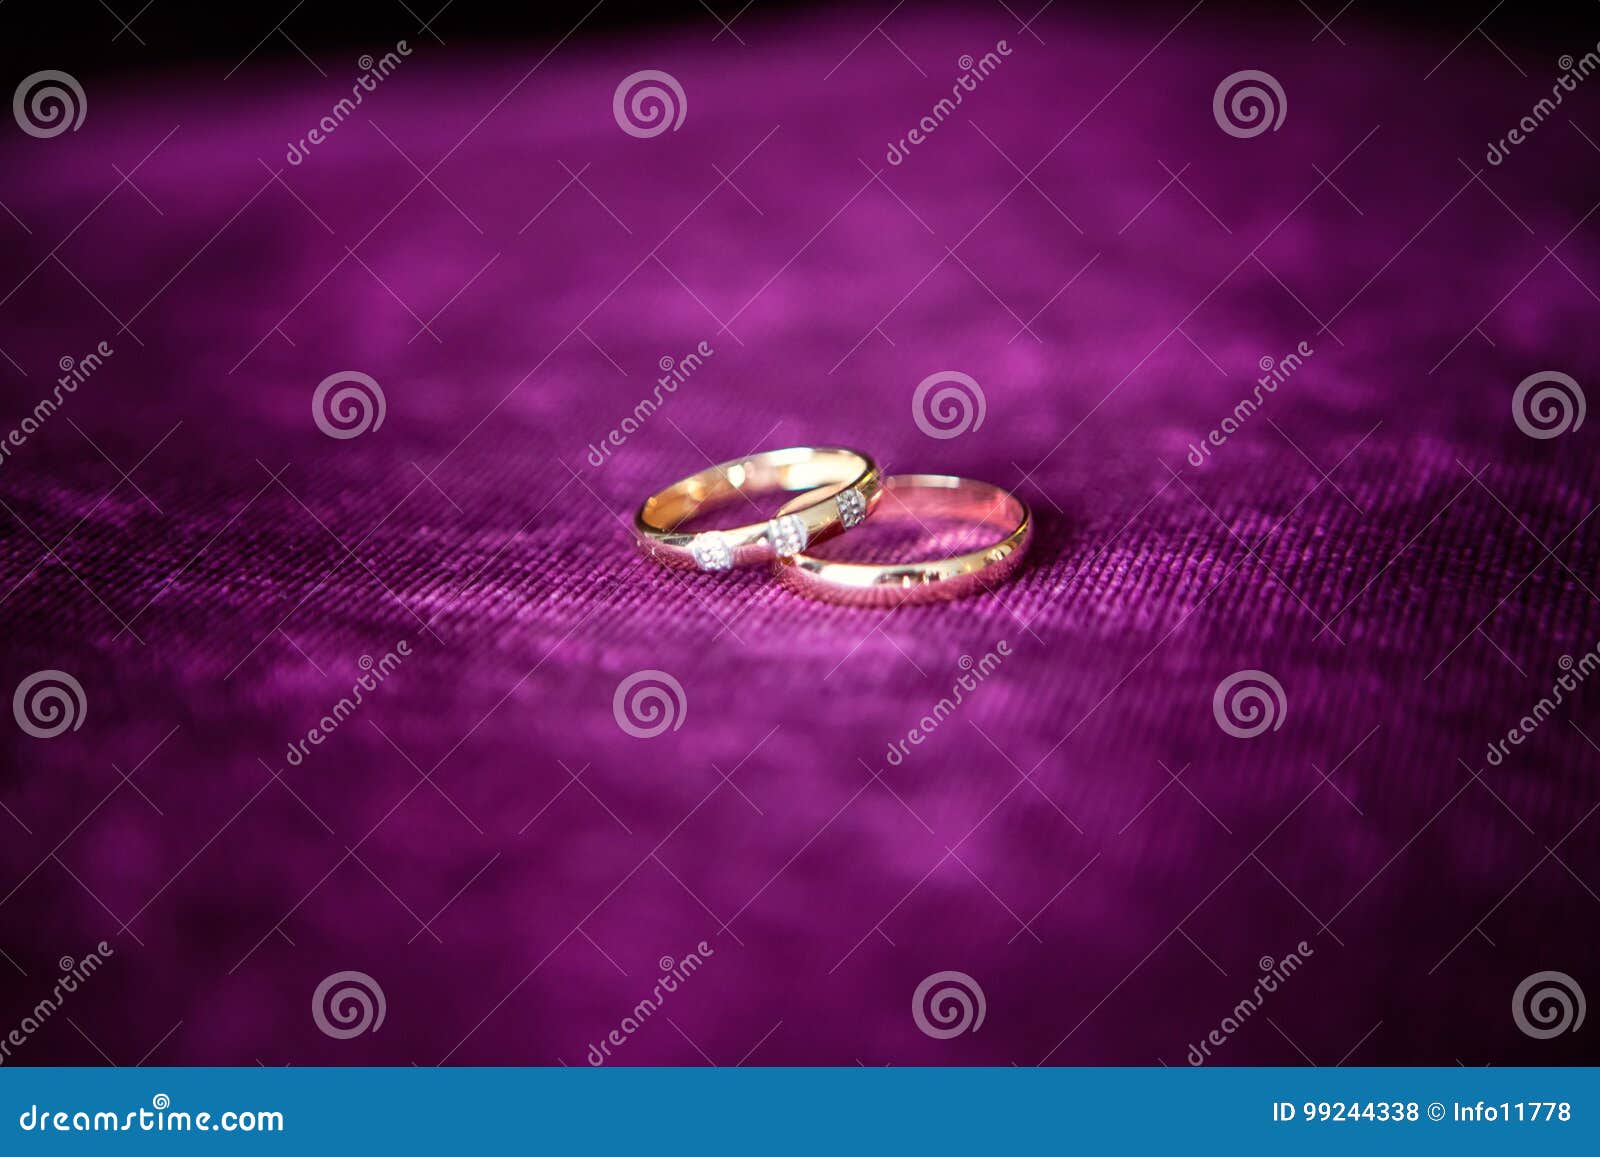 Wedding rings close up stock photo. Image of bride